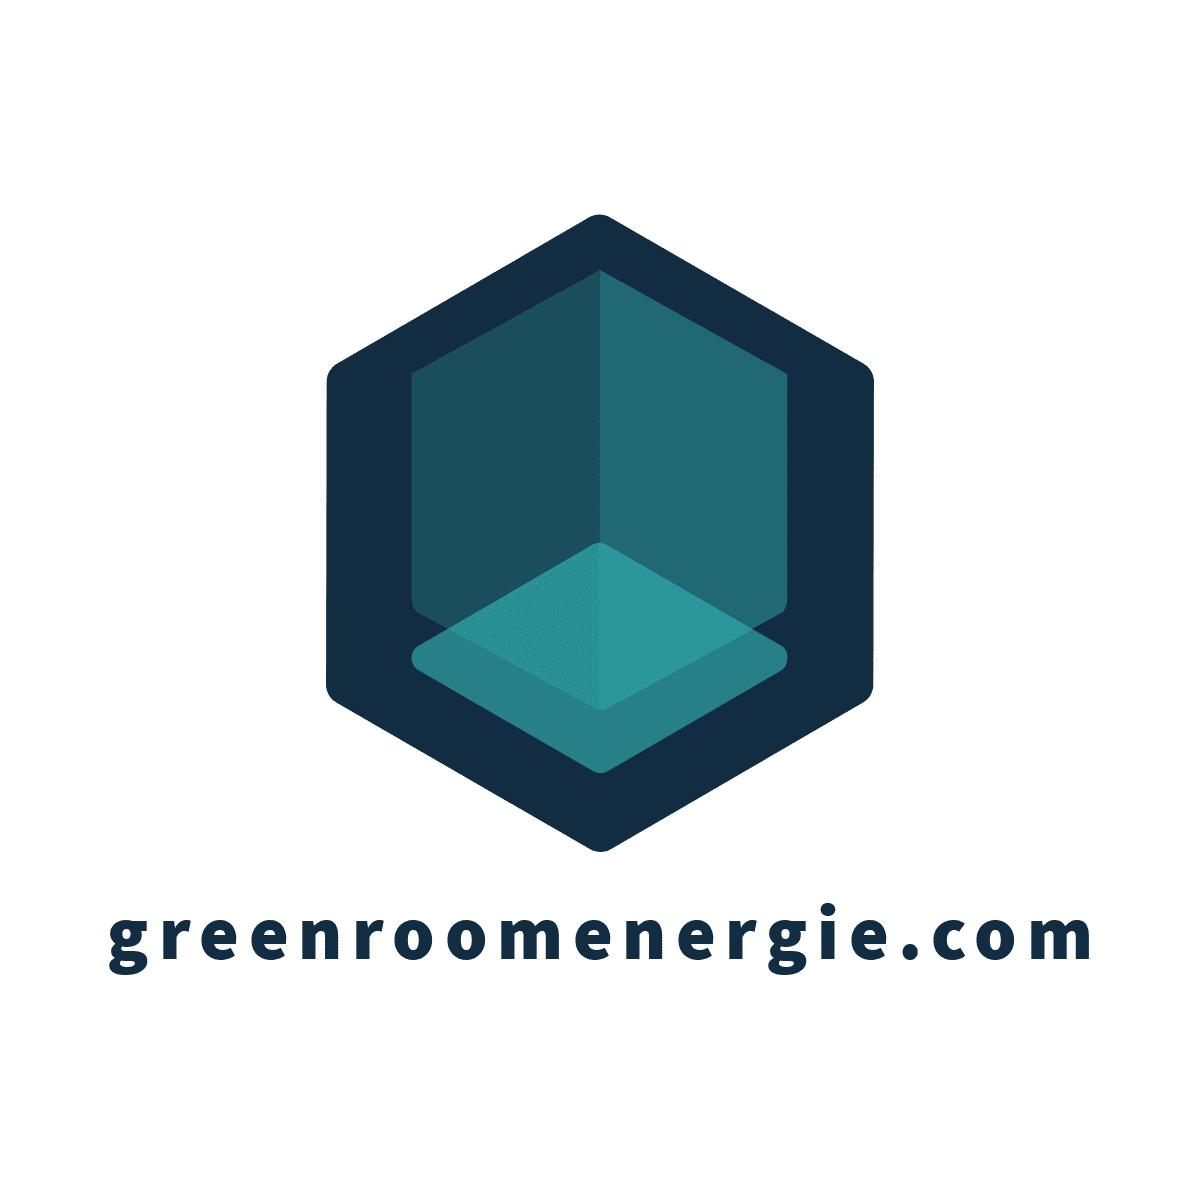 greenroomenergie.com by IDYEE